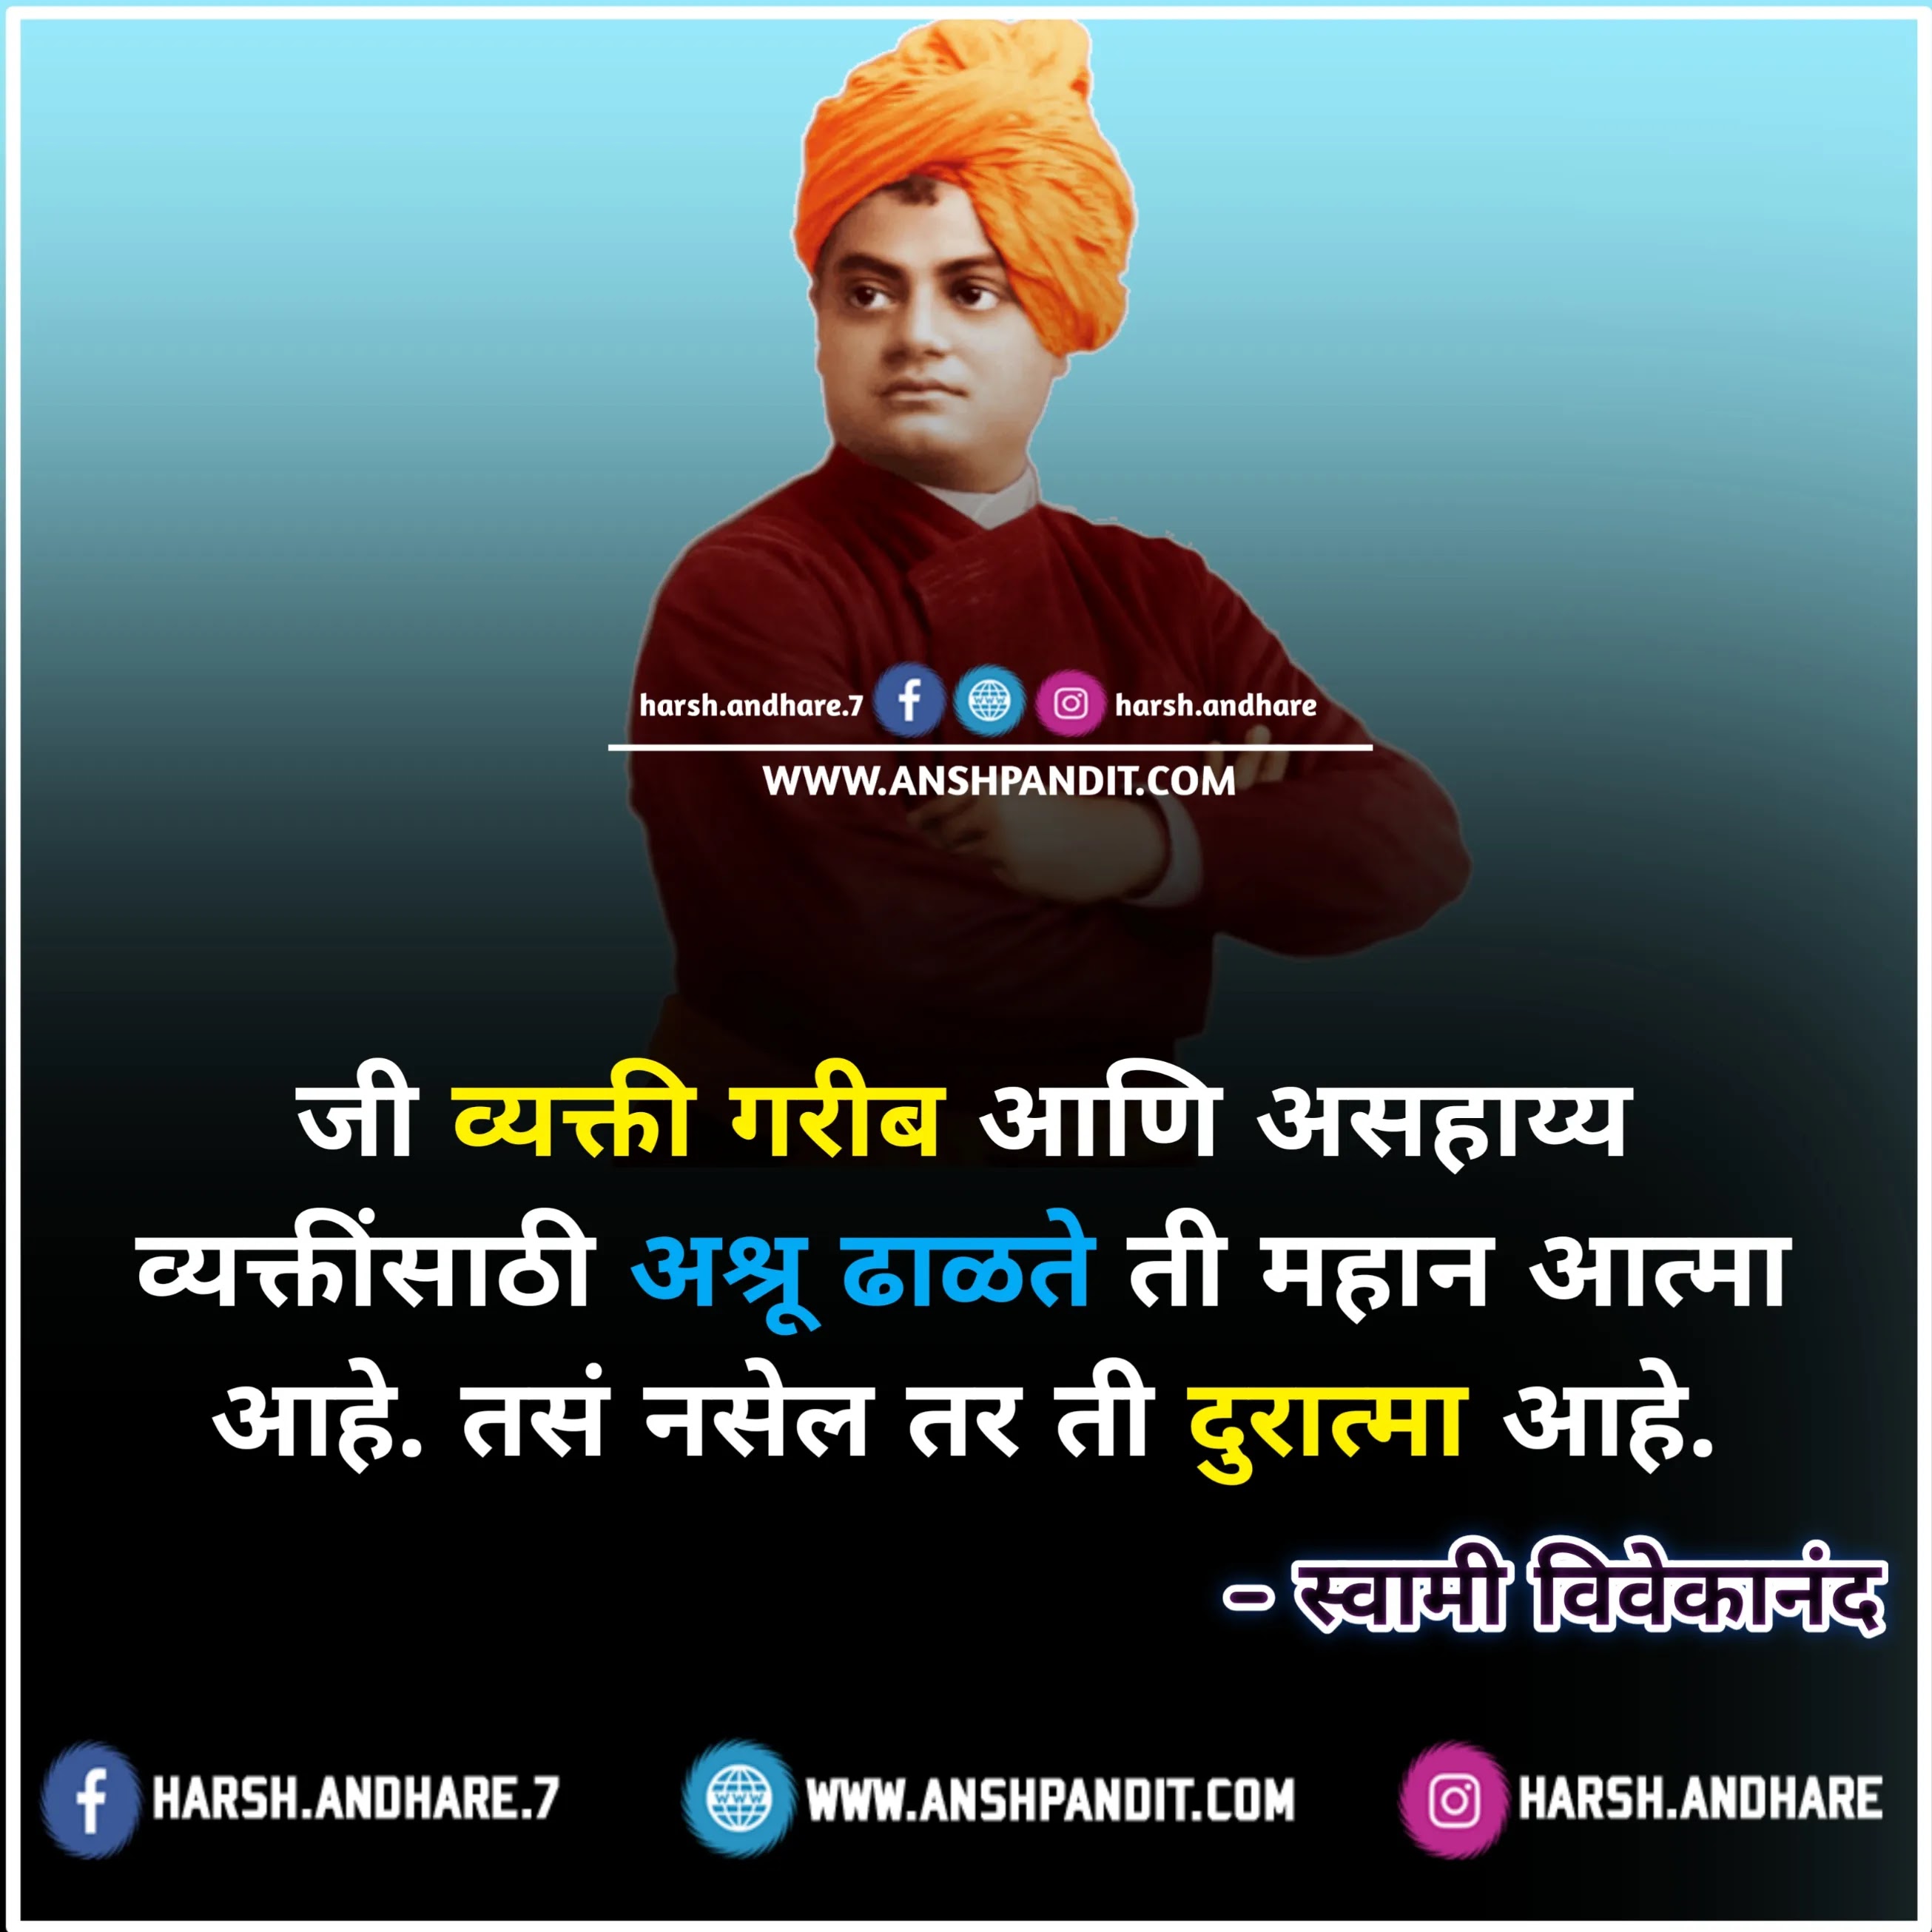 Quotes of Swami Vivekananda in Marathi